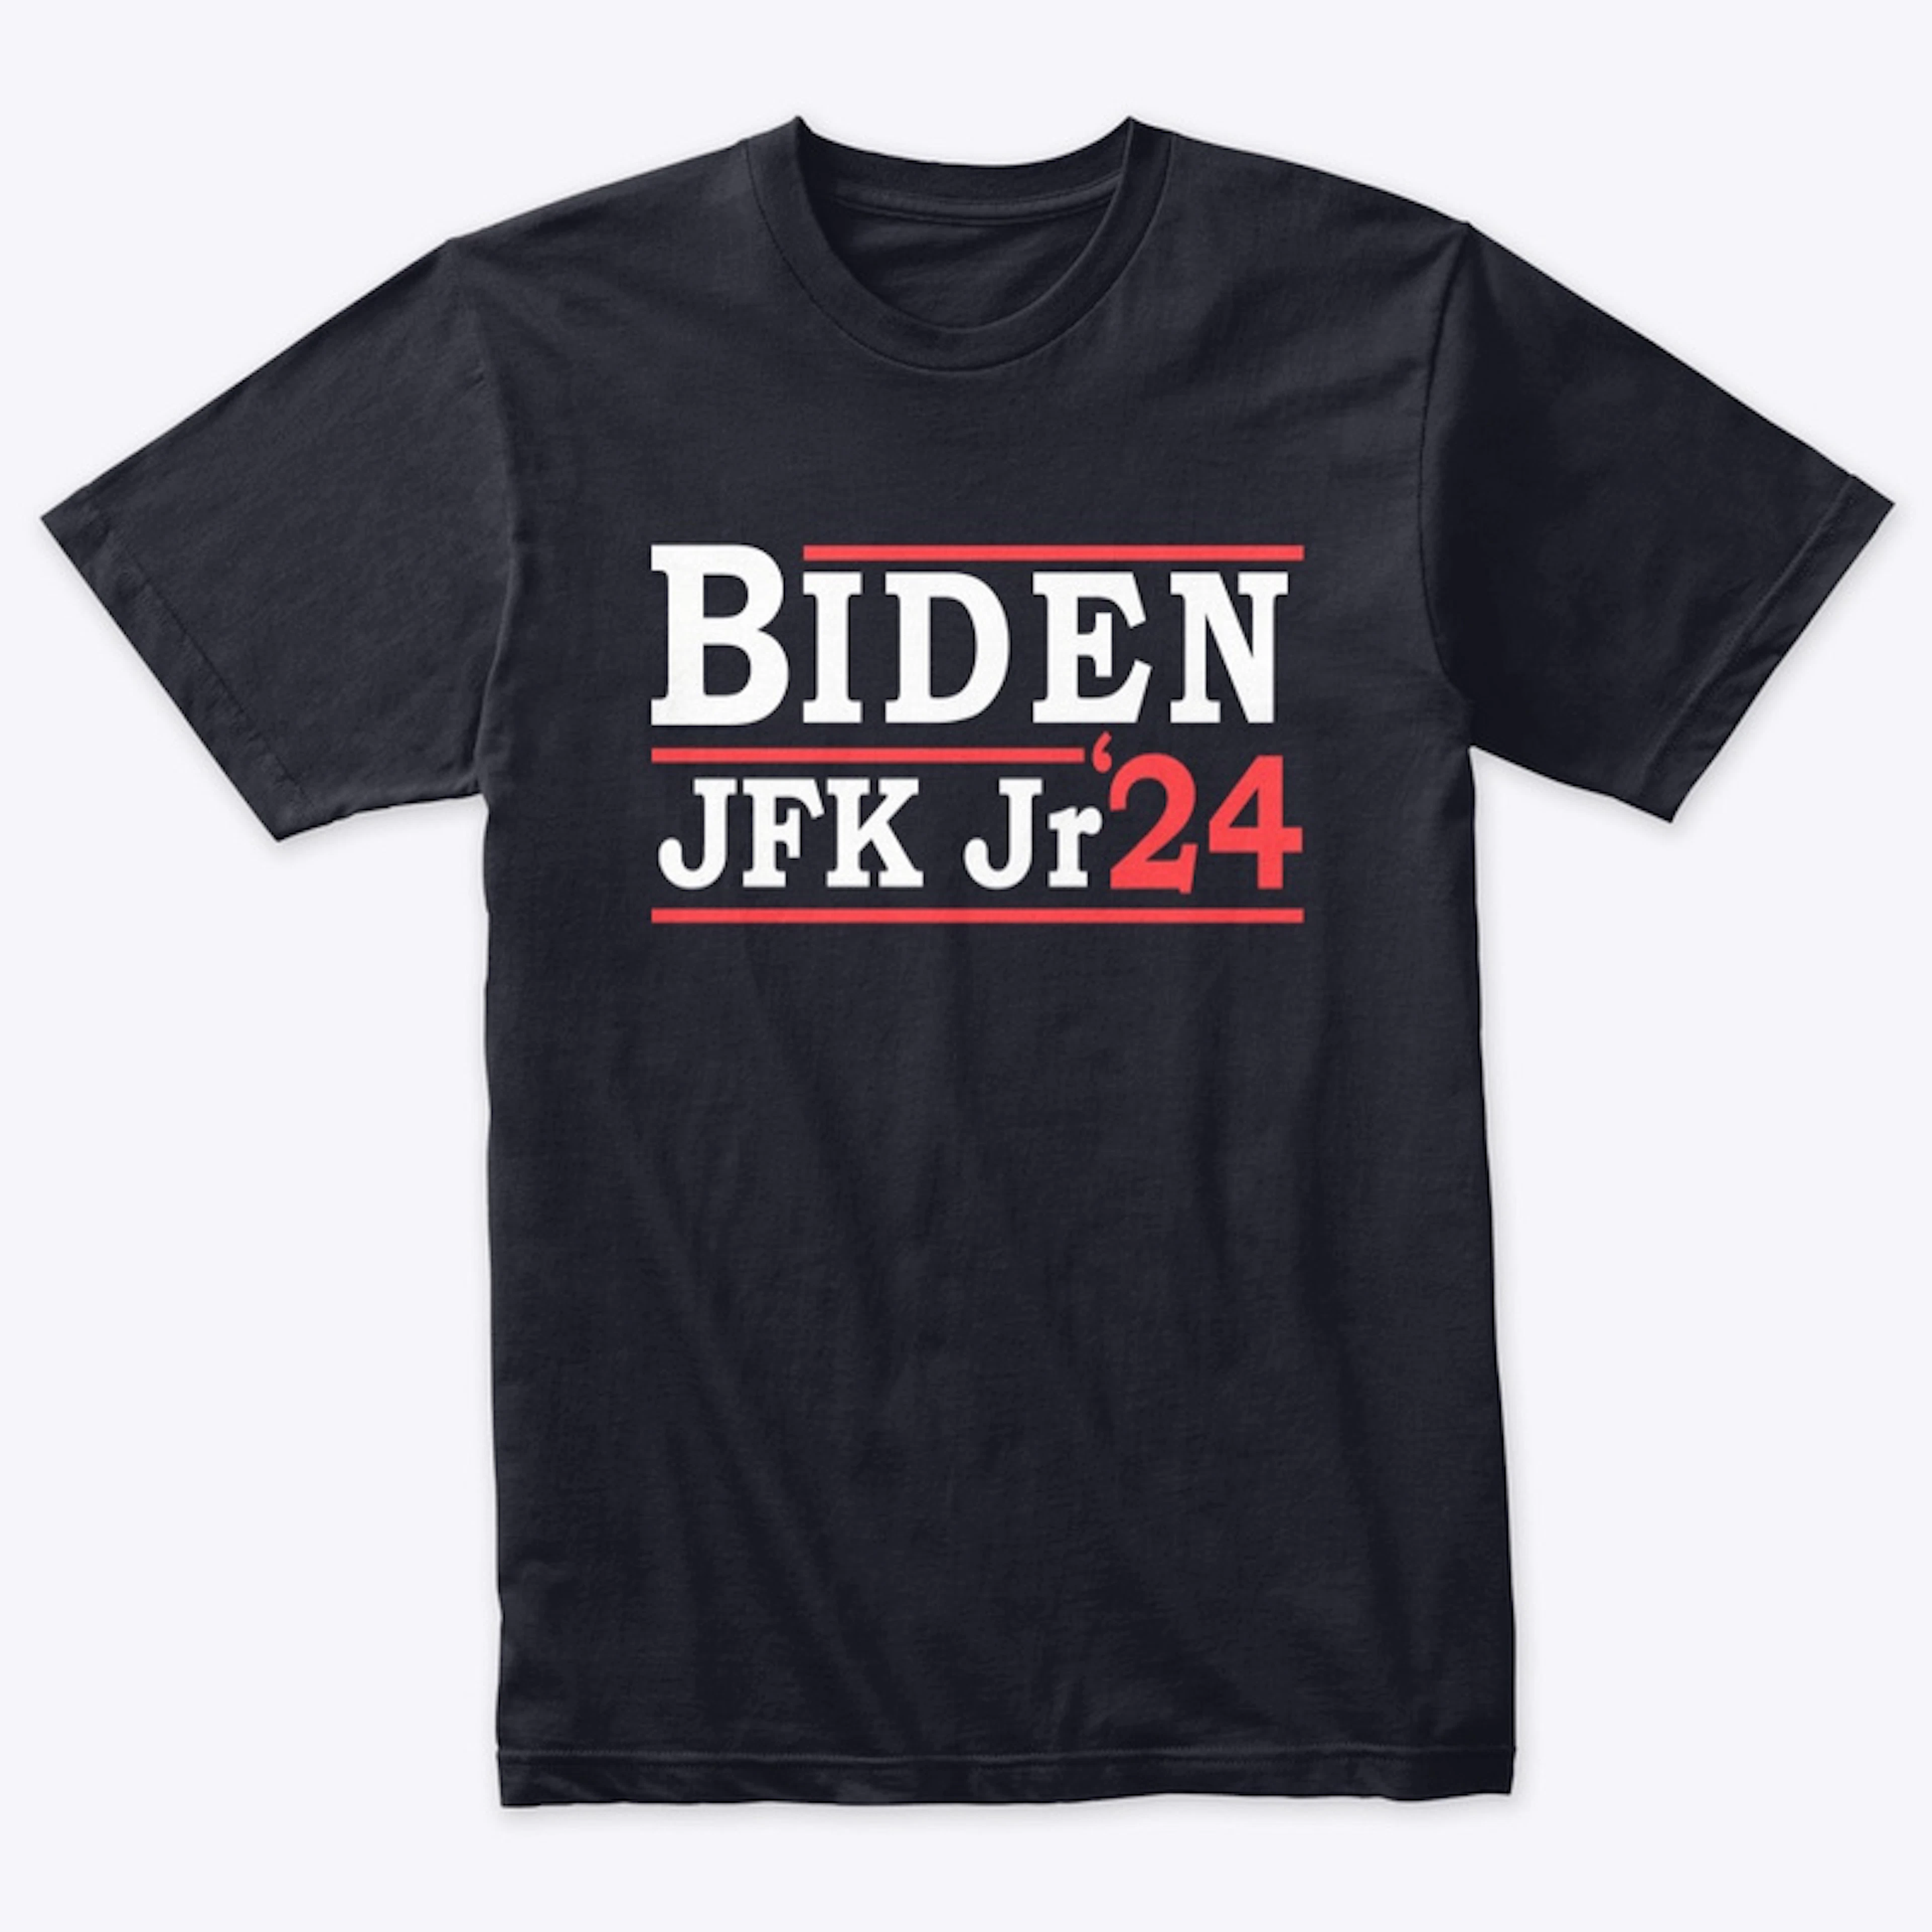 Biden/Jr '24